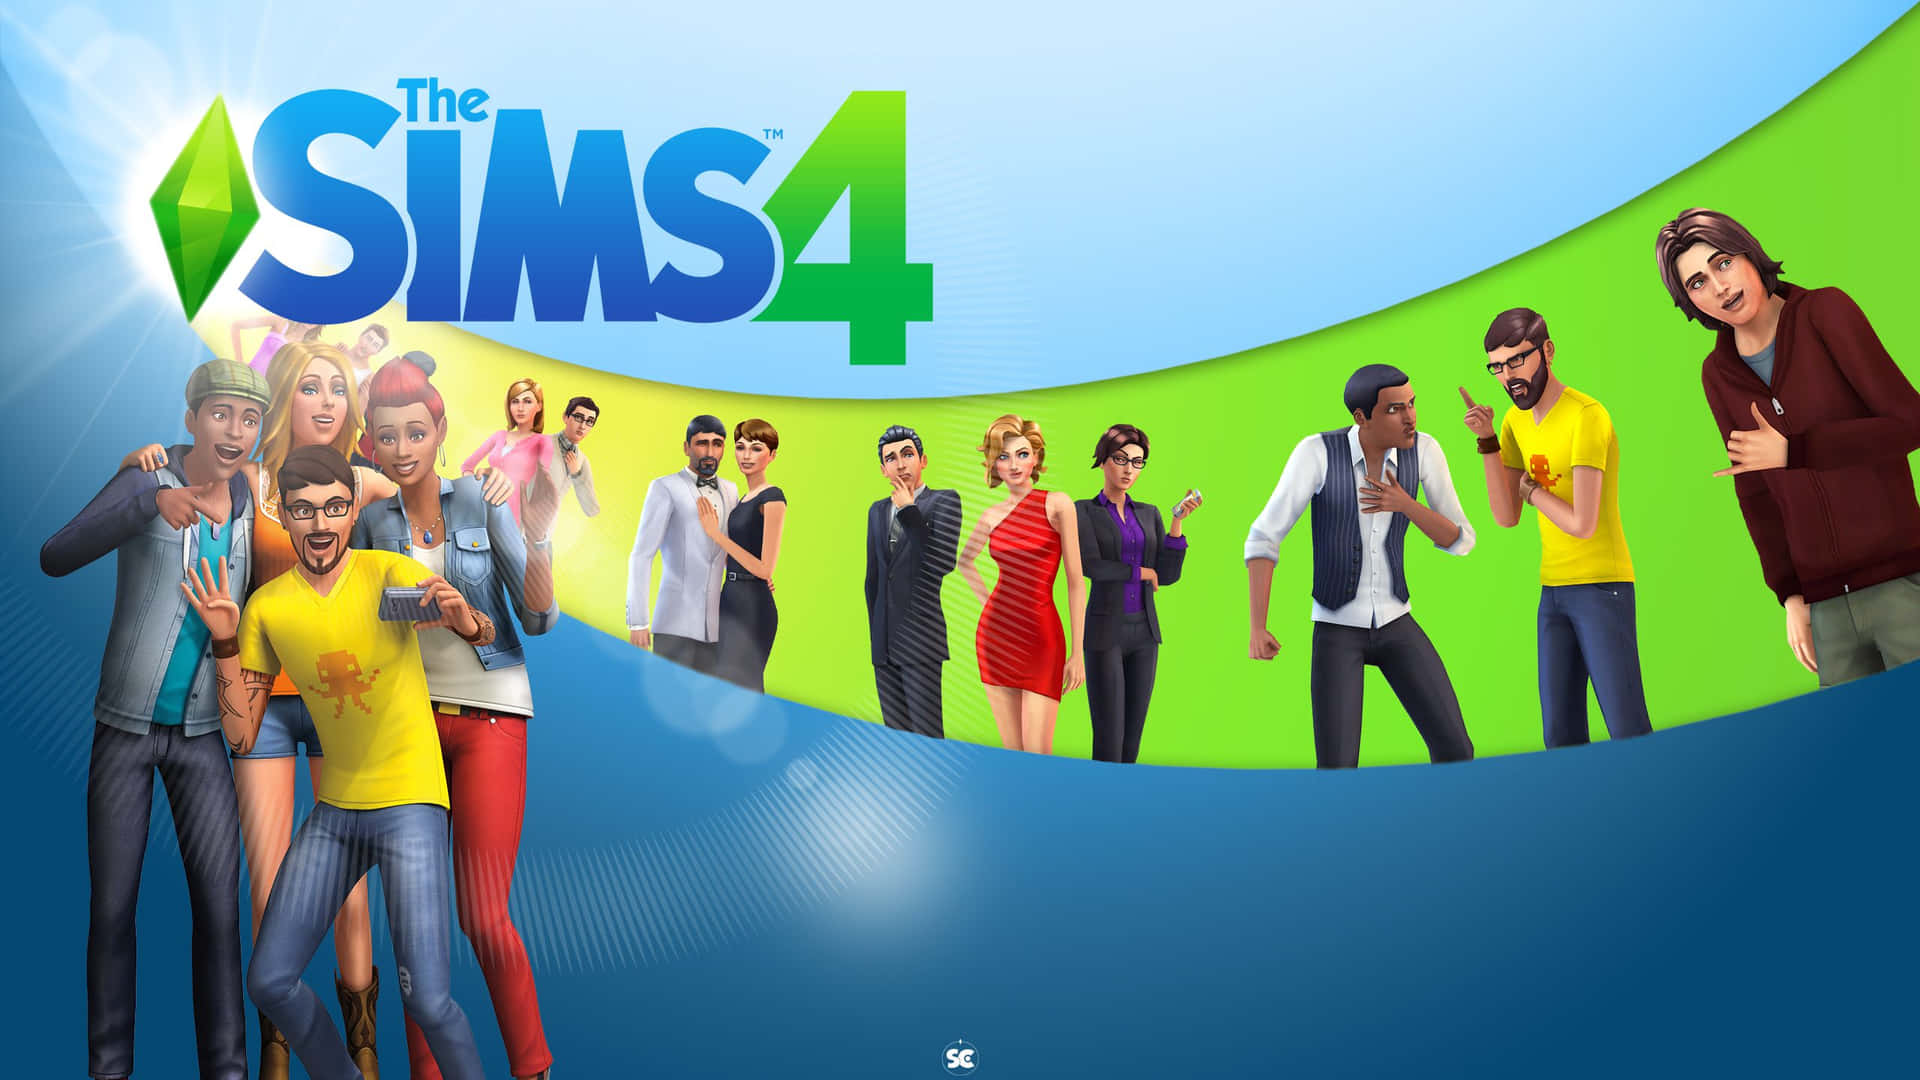 The Sims 4 Colorful Game Screenshot Wallpaper